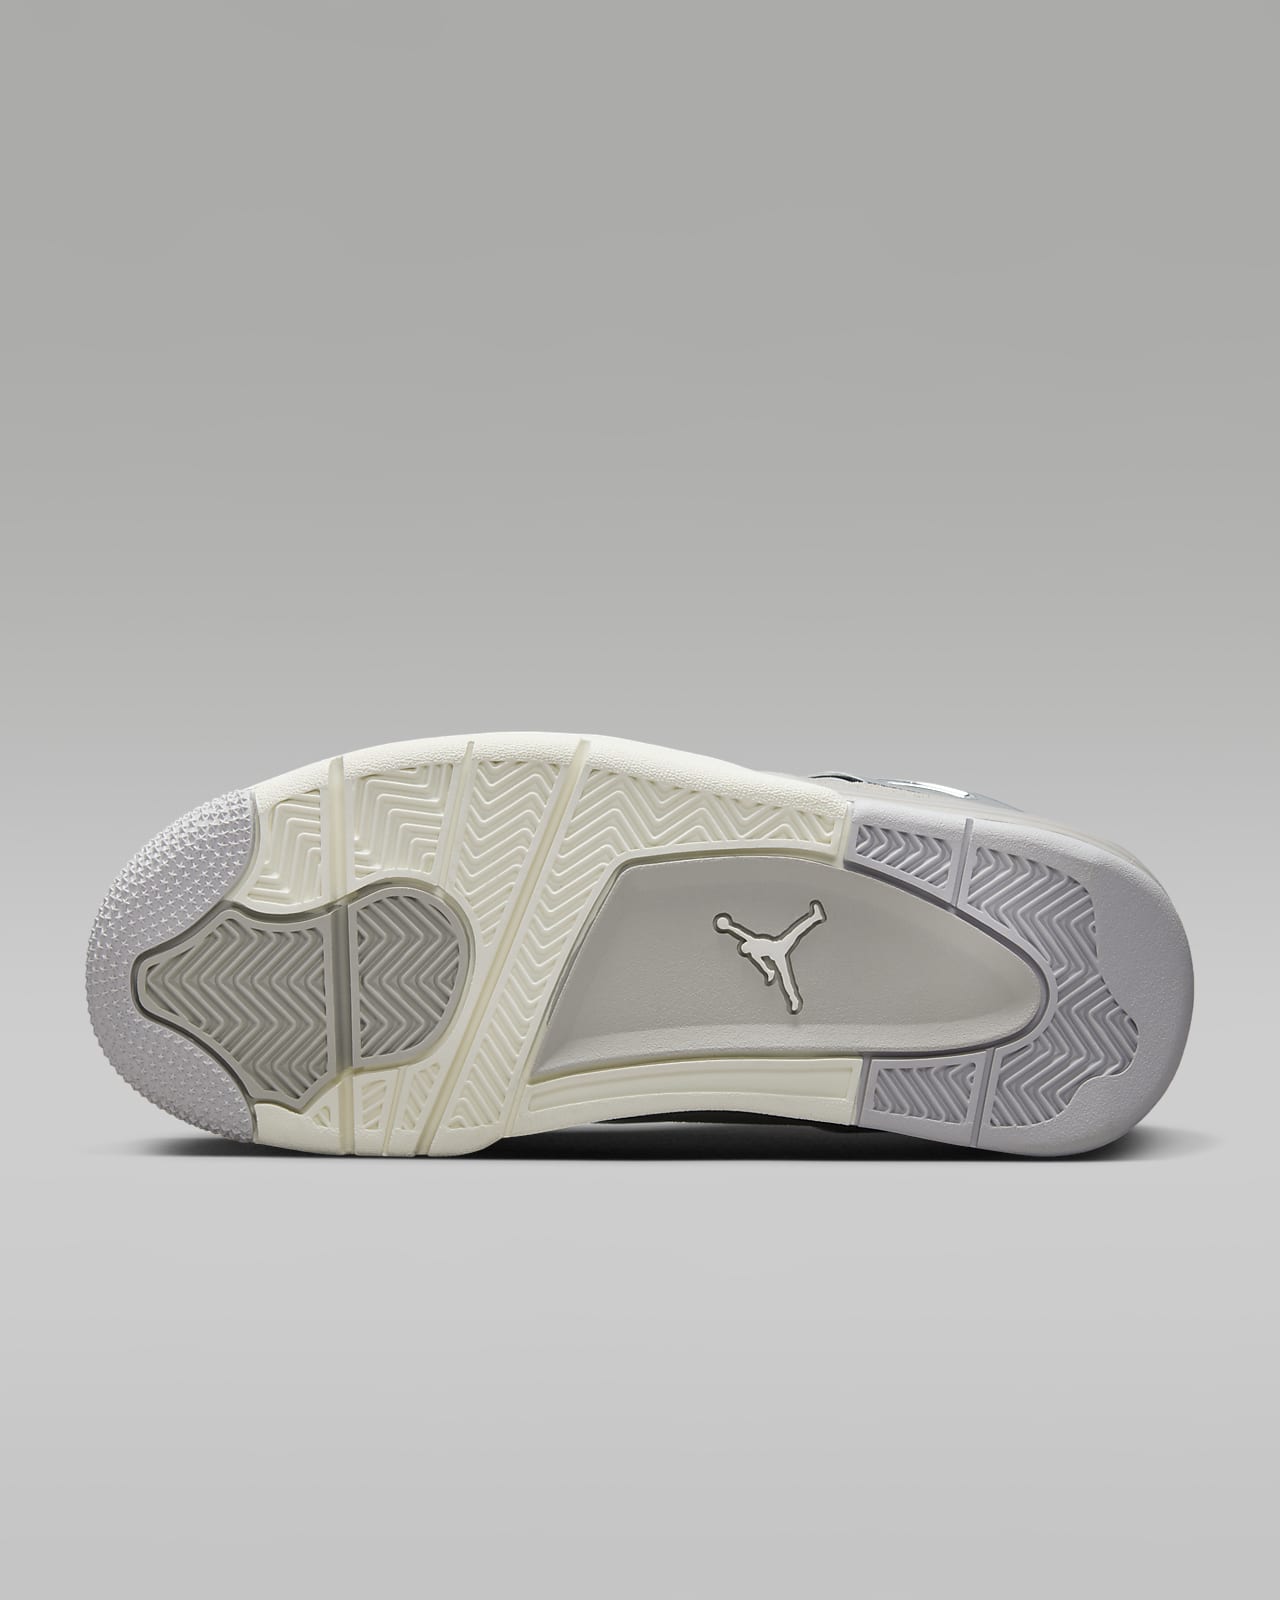 Off-White x Jordan 4 “Purple”  Nike shoes women fashion, Jordan shoes retro,  Girly shoes